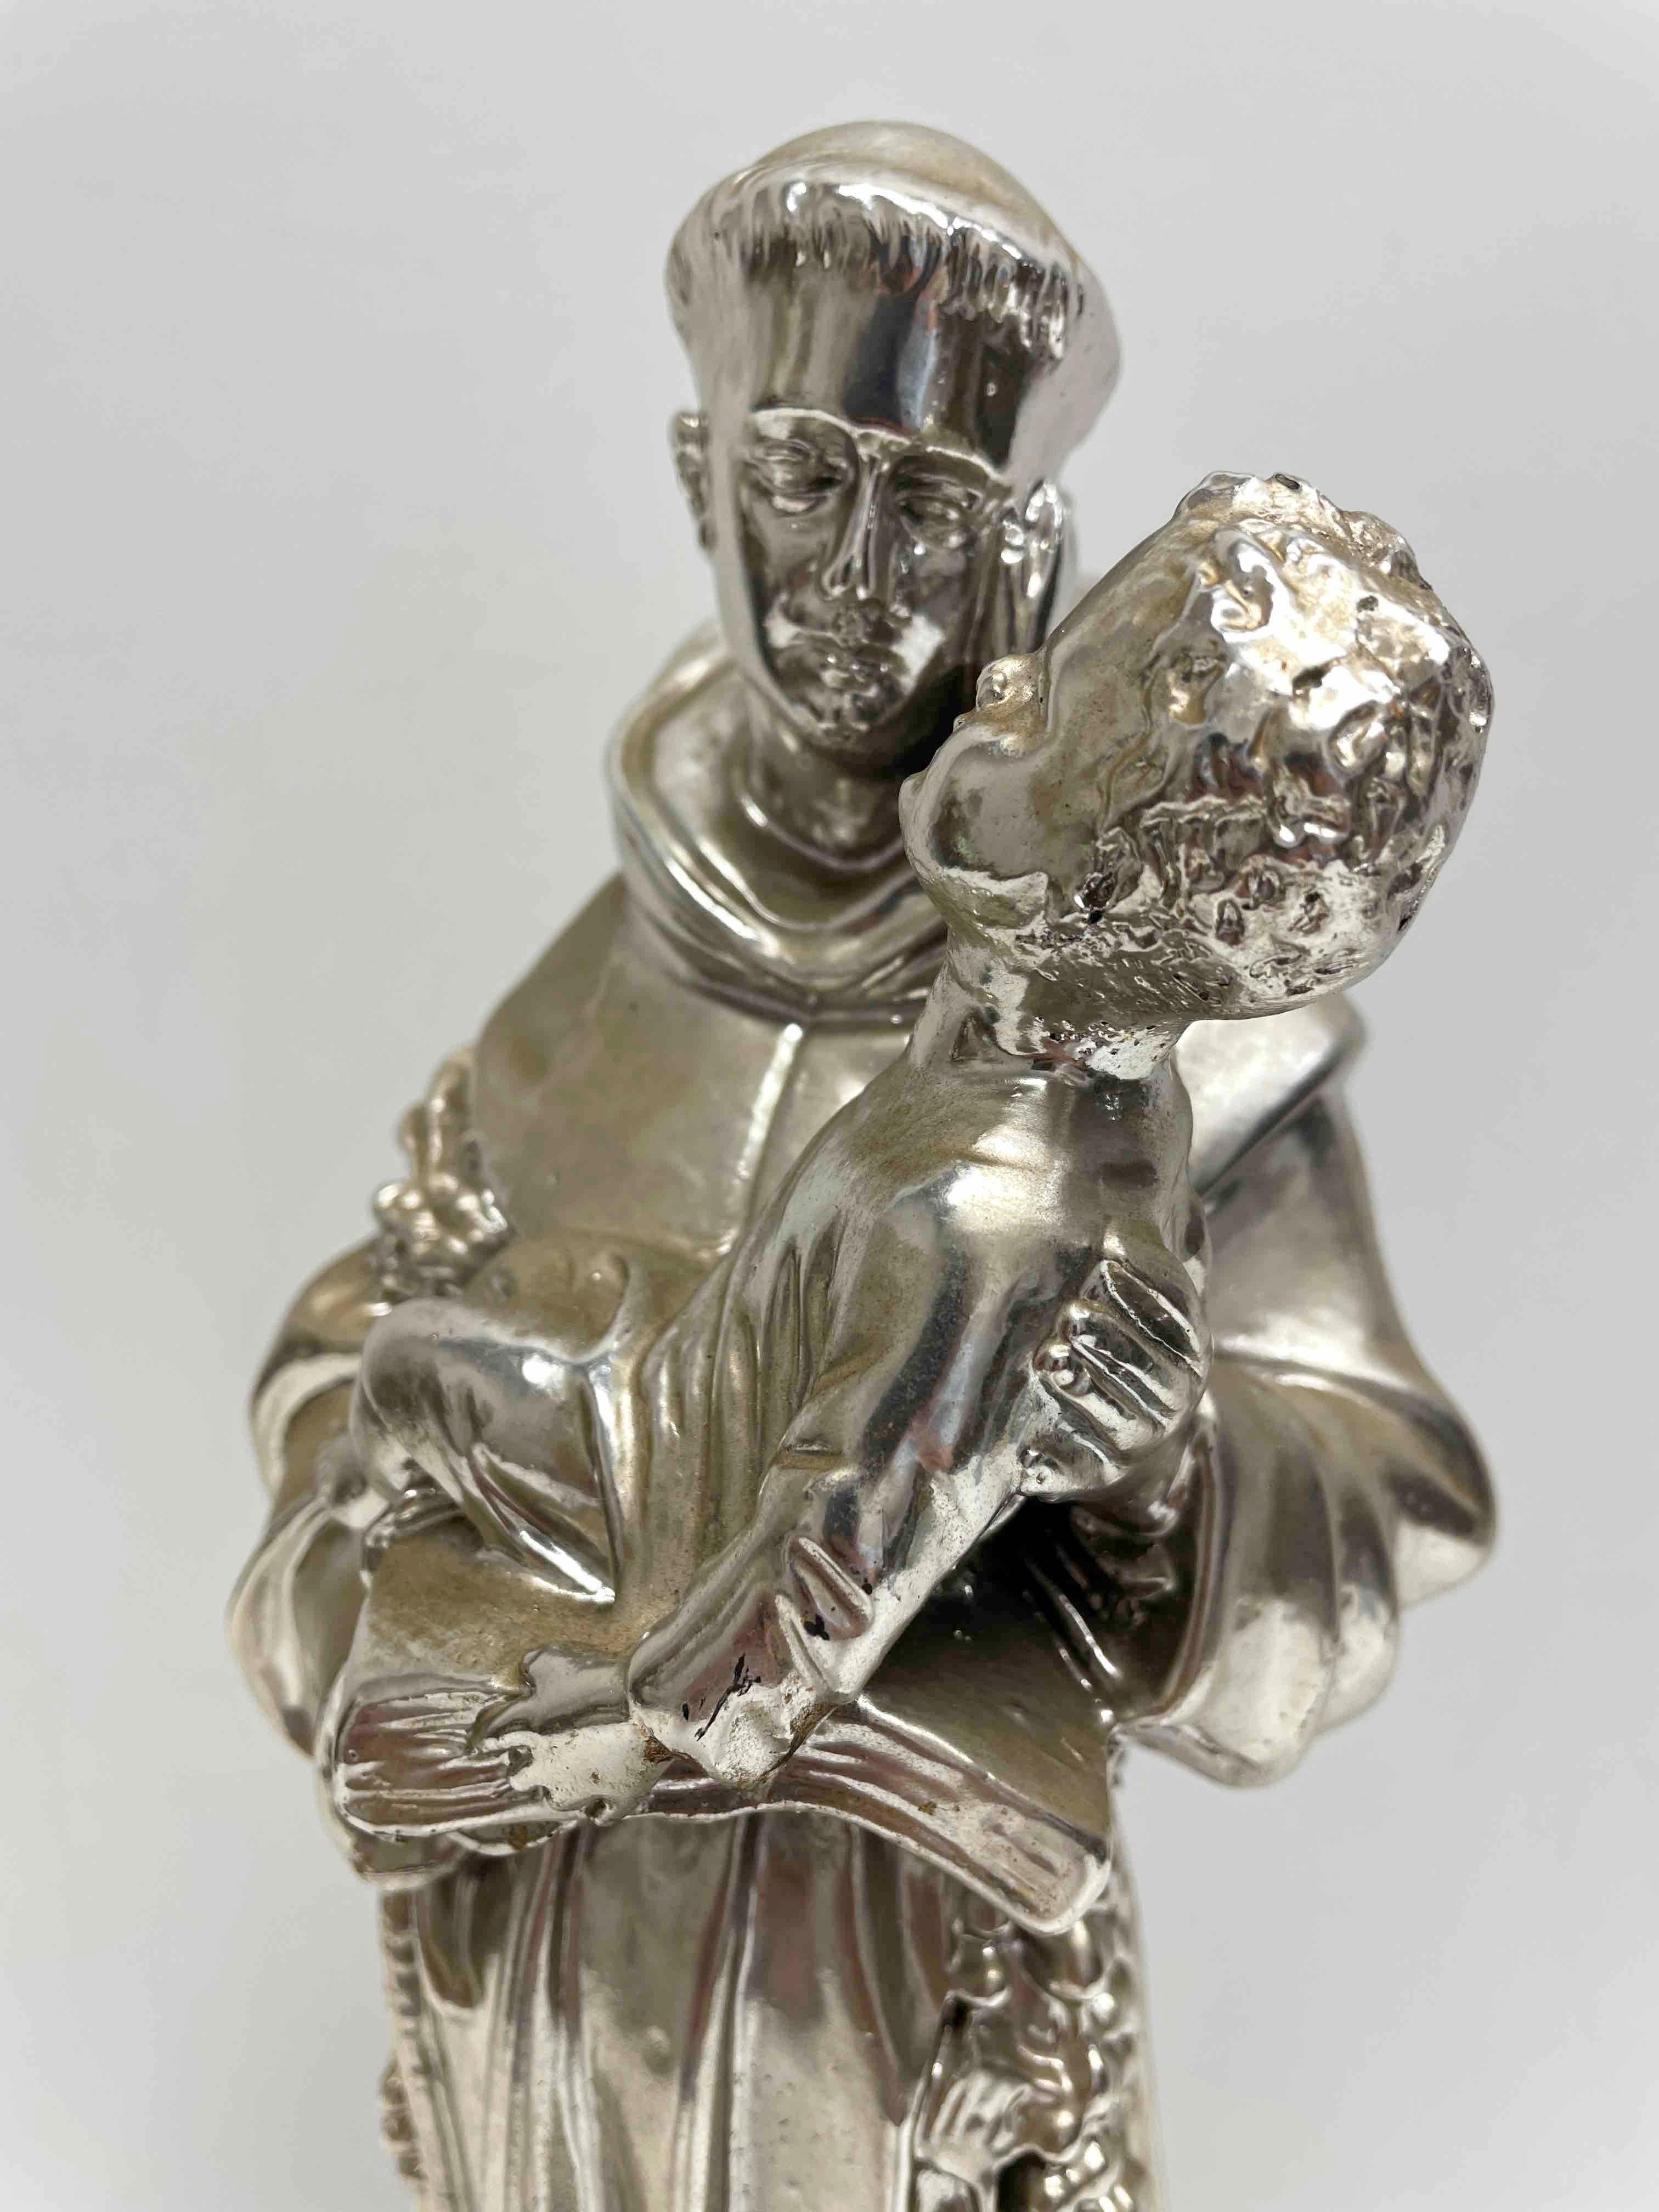 Wood Saint Anthony of Padua Statue Sculpture Holding Jesus Child, Italy, 1910s